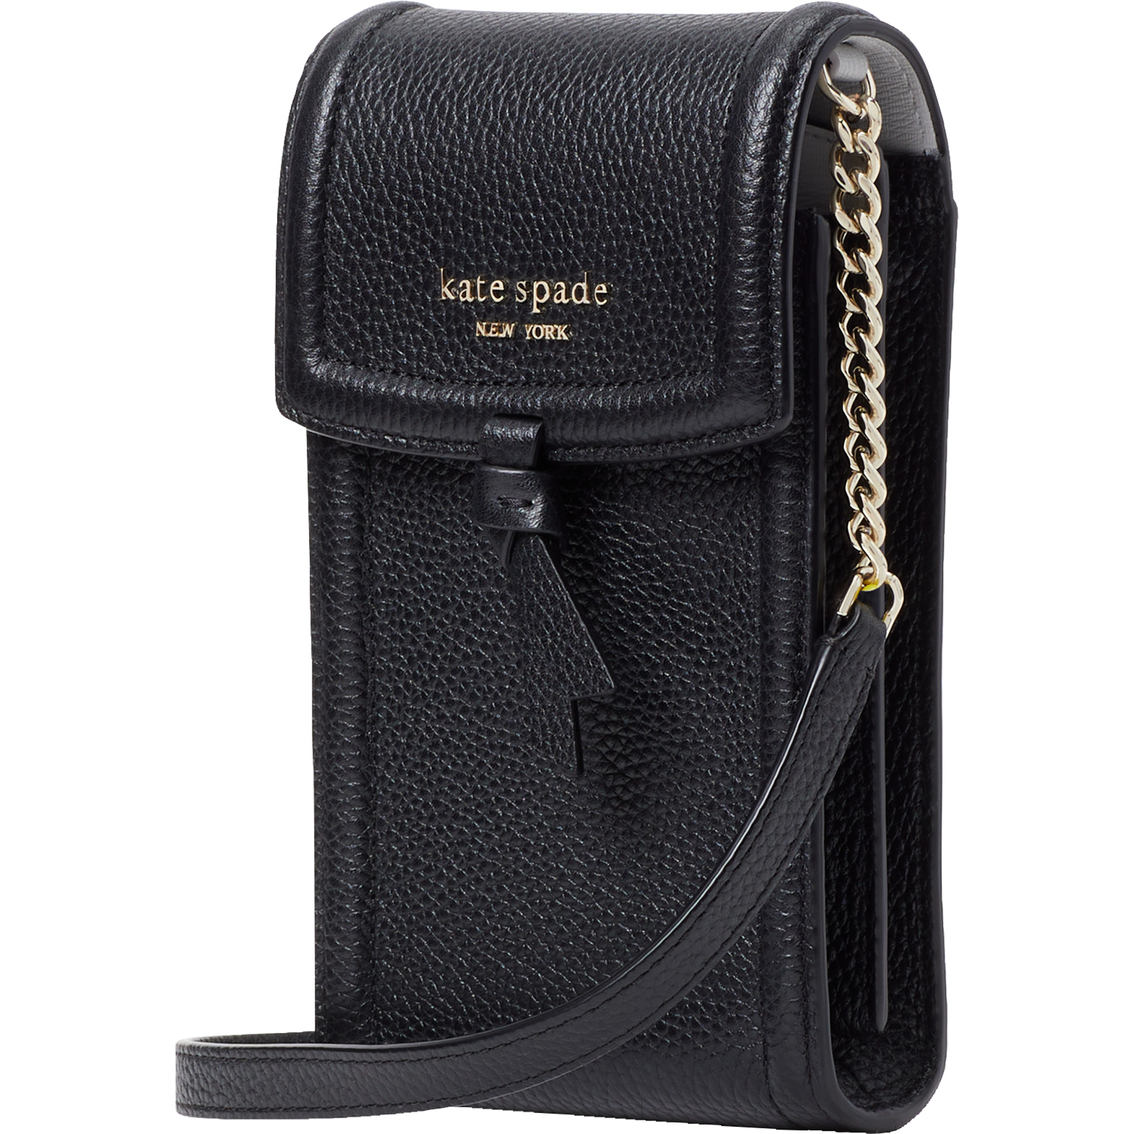 Kate Spade New York Knott Pebbled Leather Phone Crossbody - Image 3 of 4